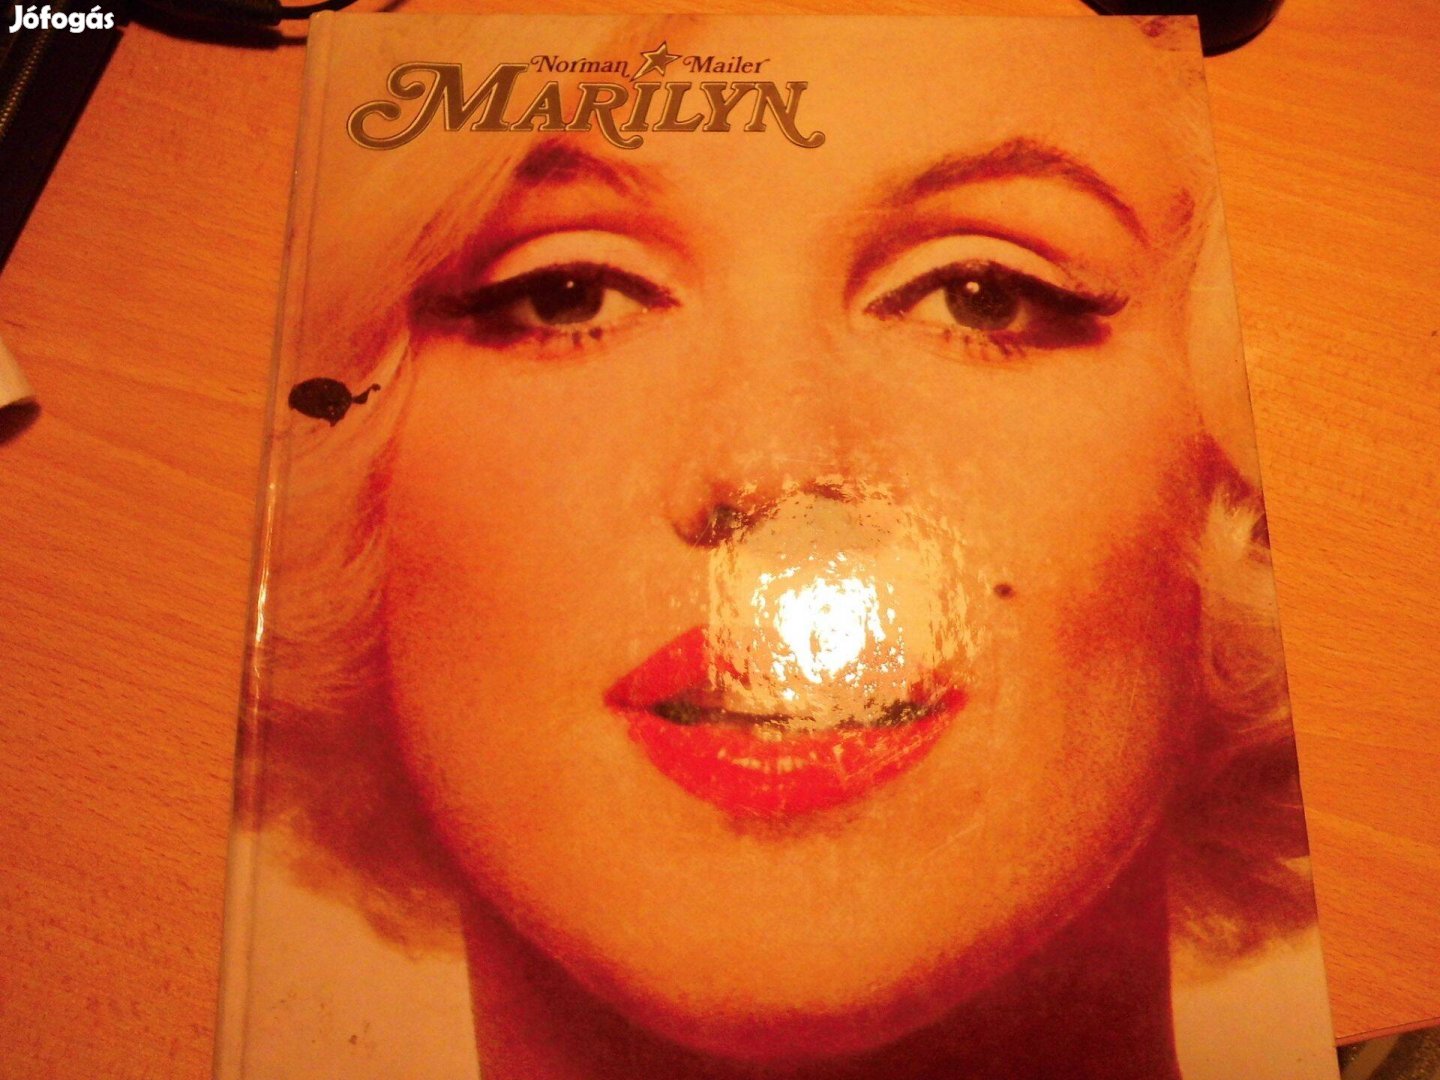 Norman Mailer Marilyn (Monroe album) - könyv eladó!